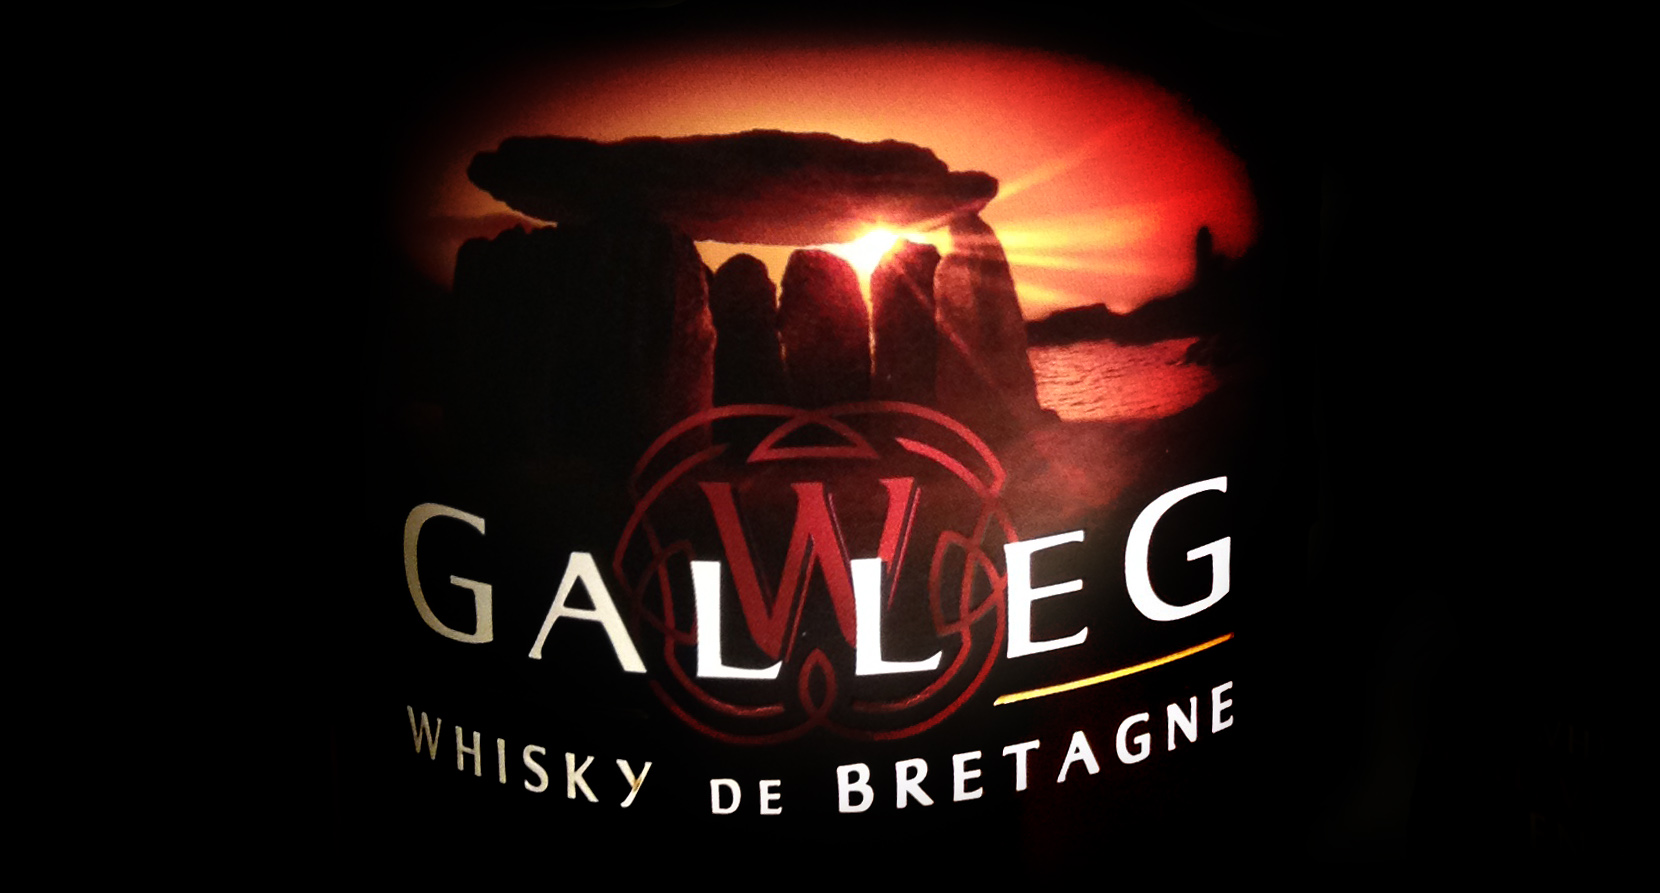 GALLEG 42%, Whisky Bretagne